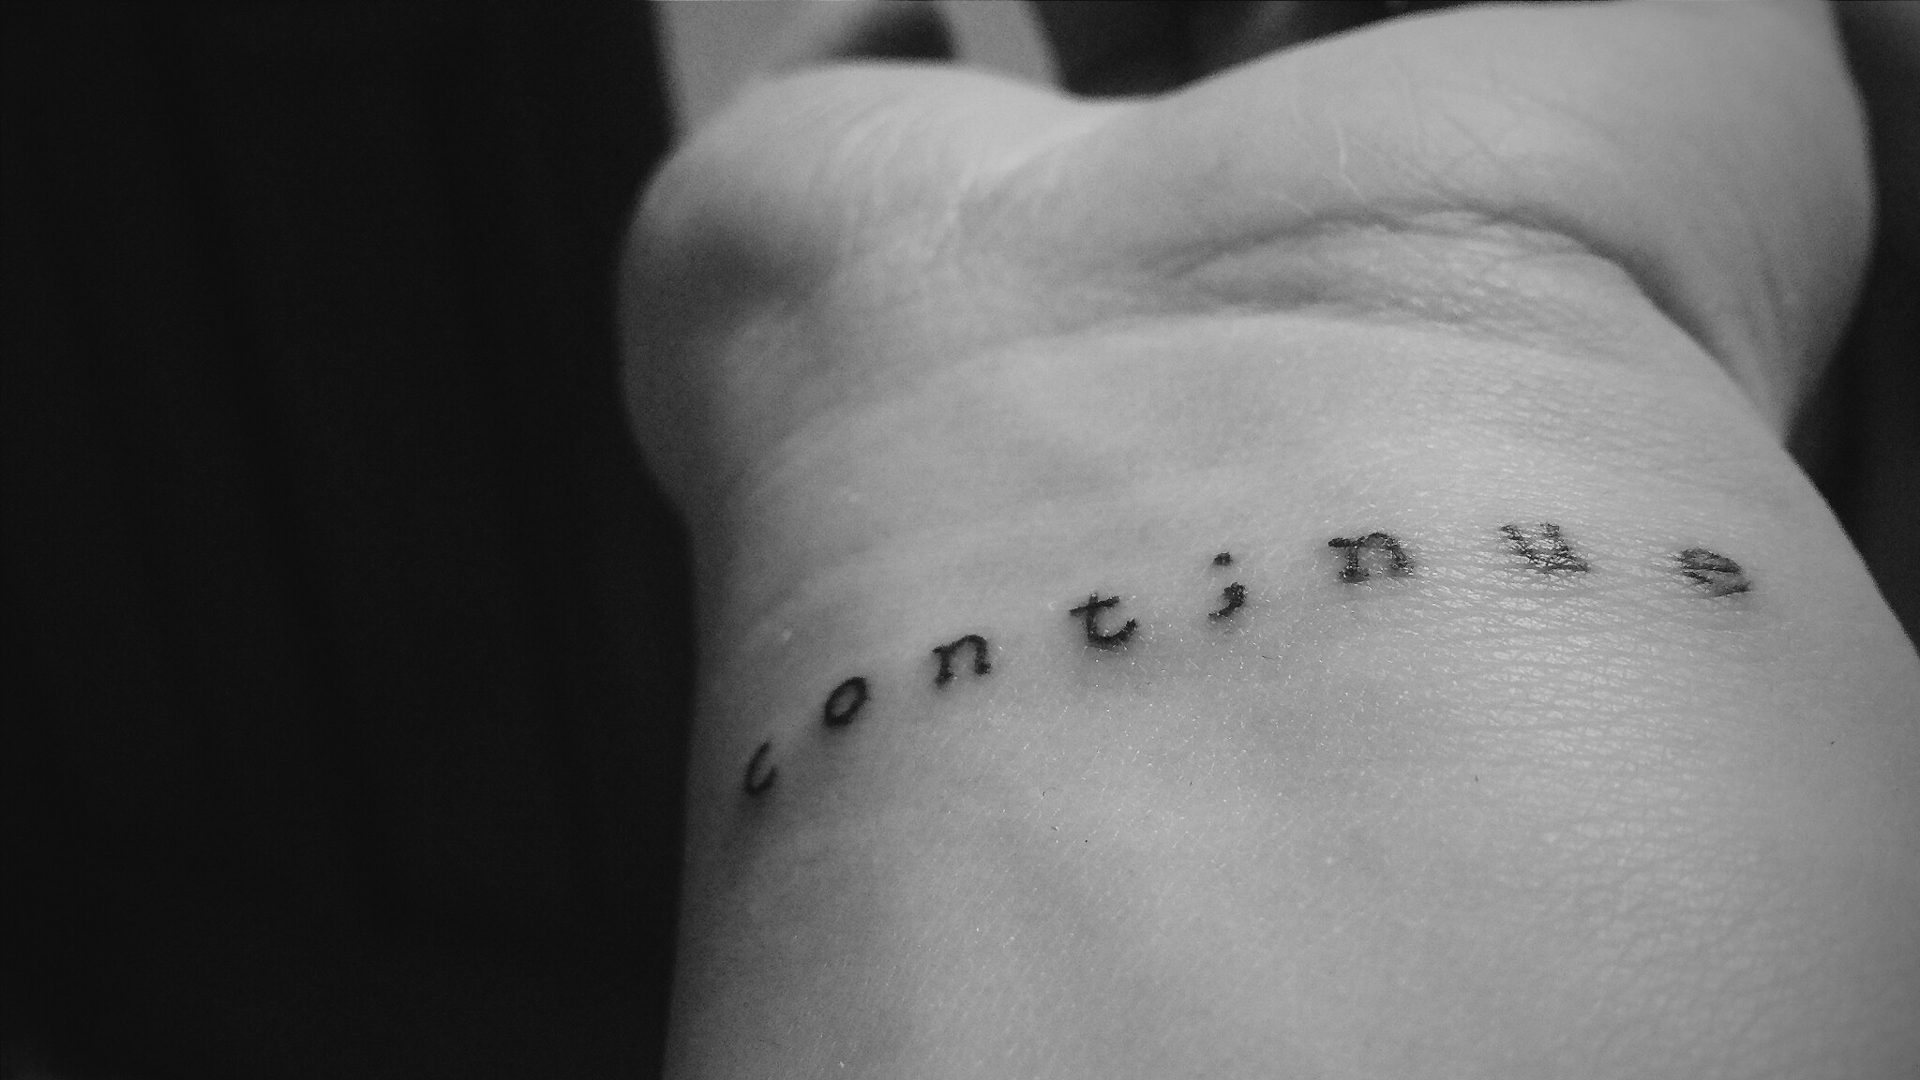 Wonderful Semicolon With Word Continue Tattoo On Wrist